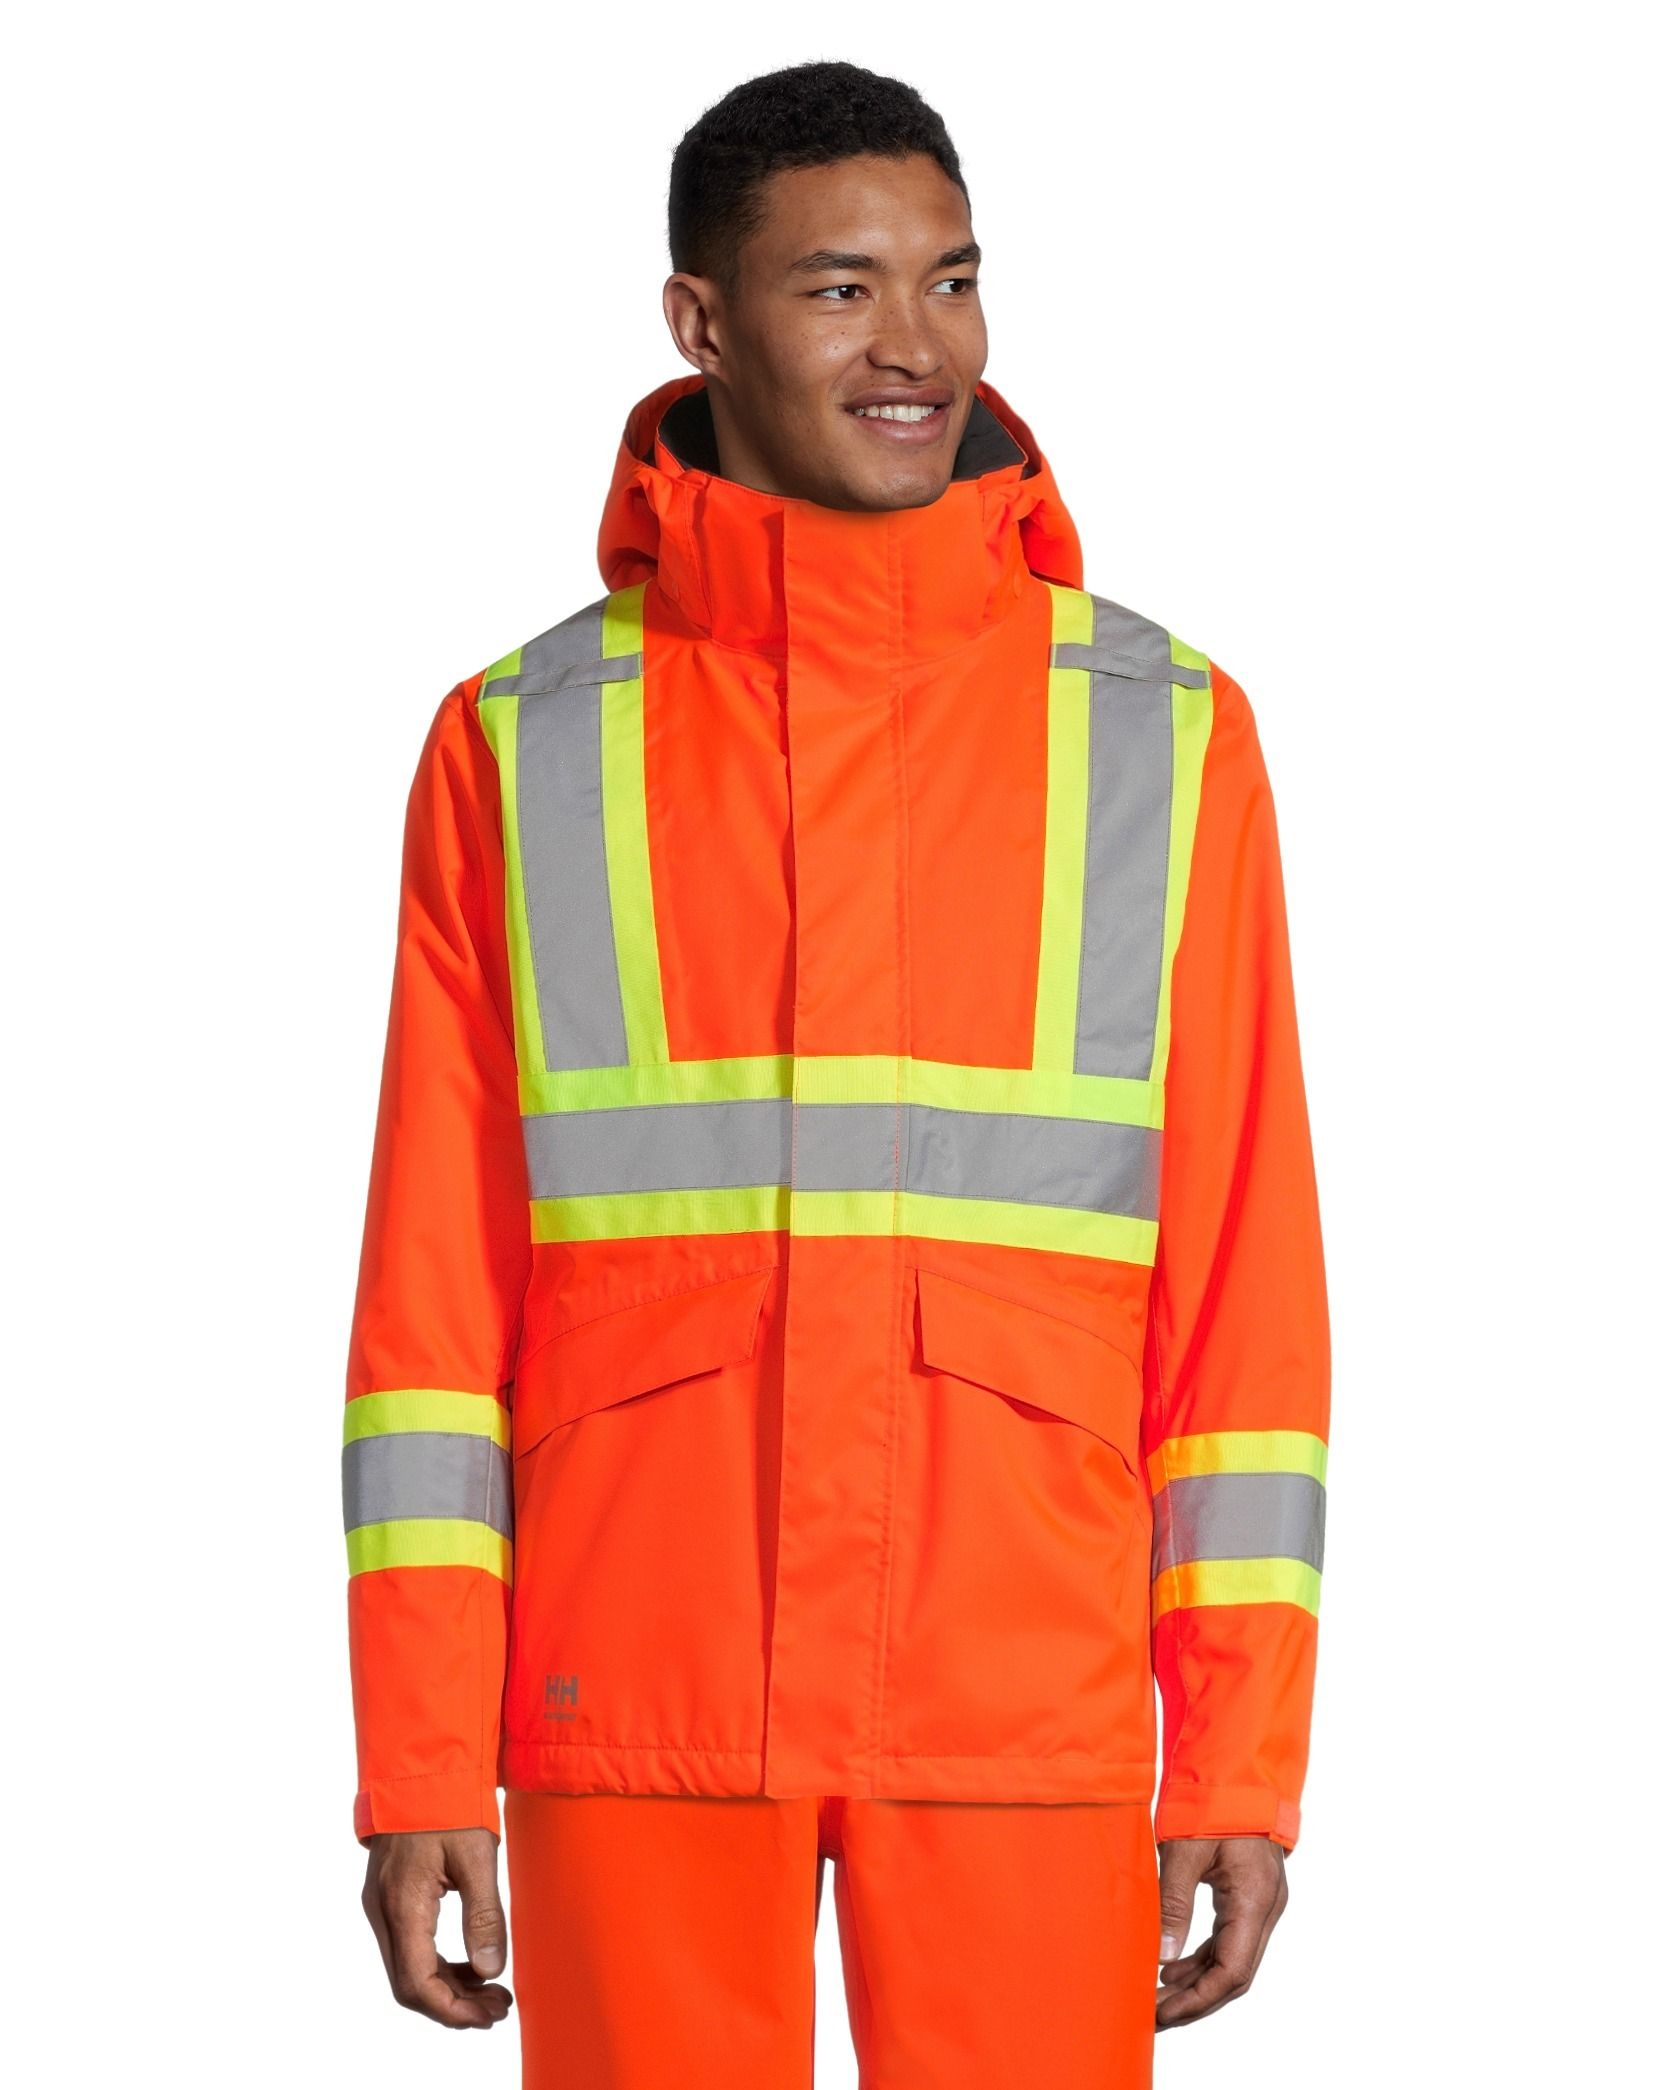 Men Visibility Safety Workwear Hooded Jacket Pants Set